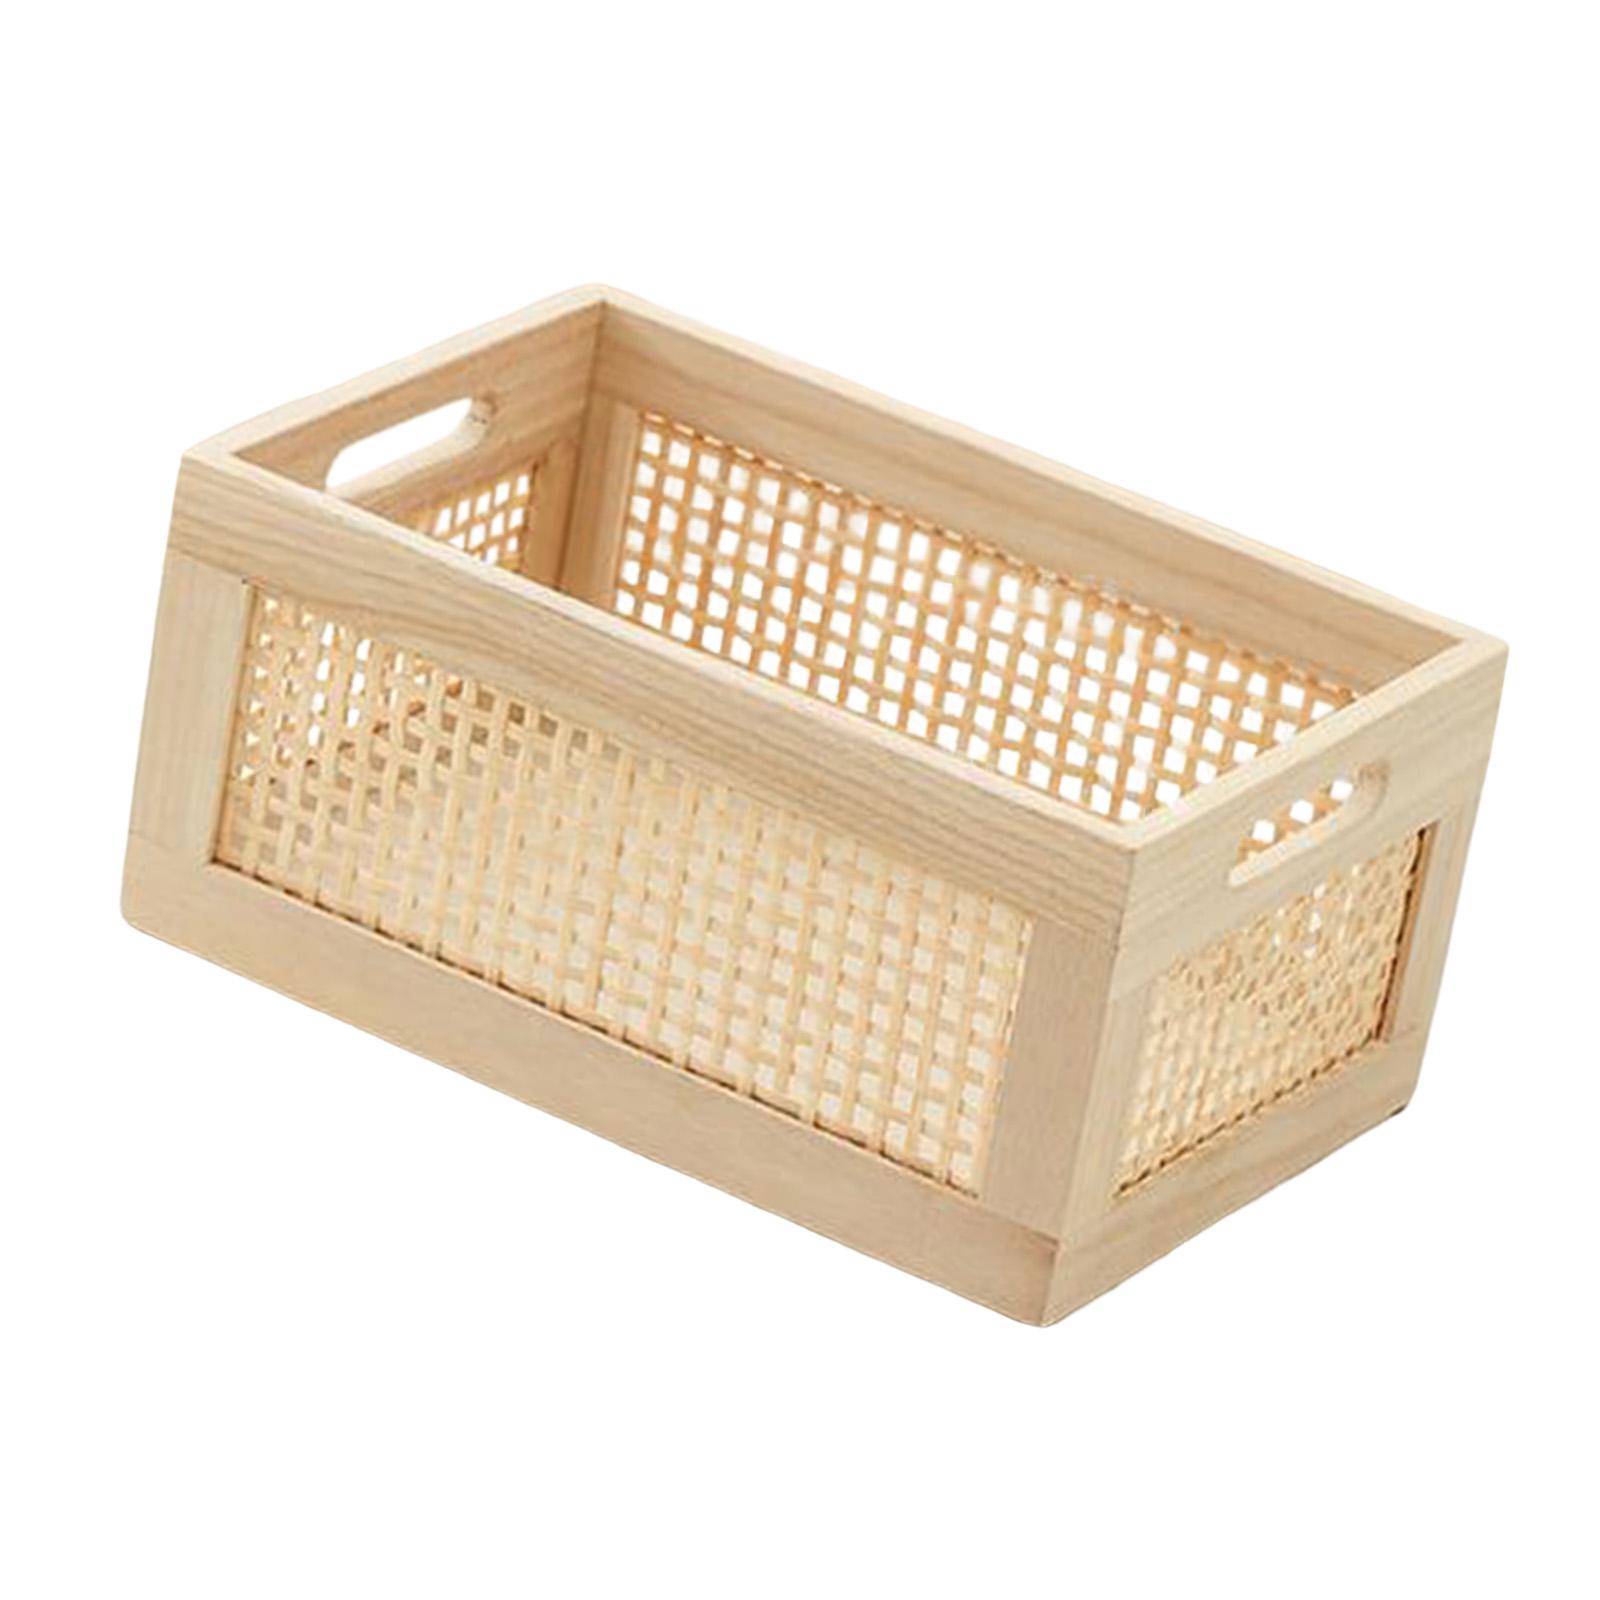 Rustic Wooden Box, Rectangular Storage Basket Toy Multipurpose Wood Frame Storage Basket Sundry Storage Box for Pantry Shelves Office Kitchen Super